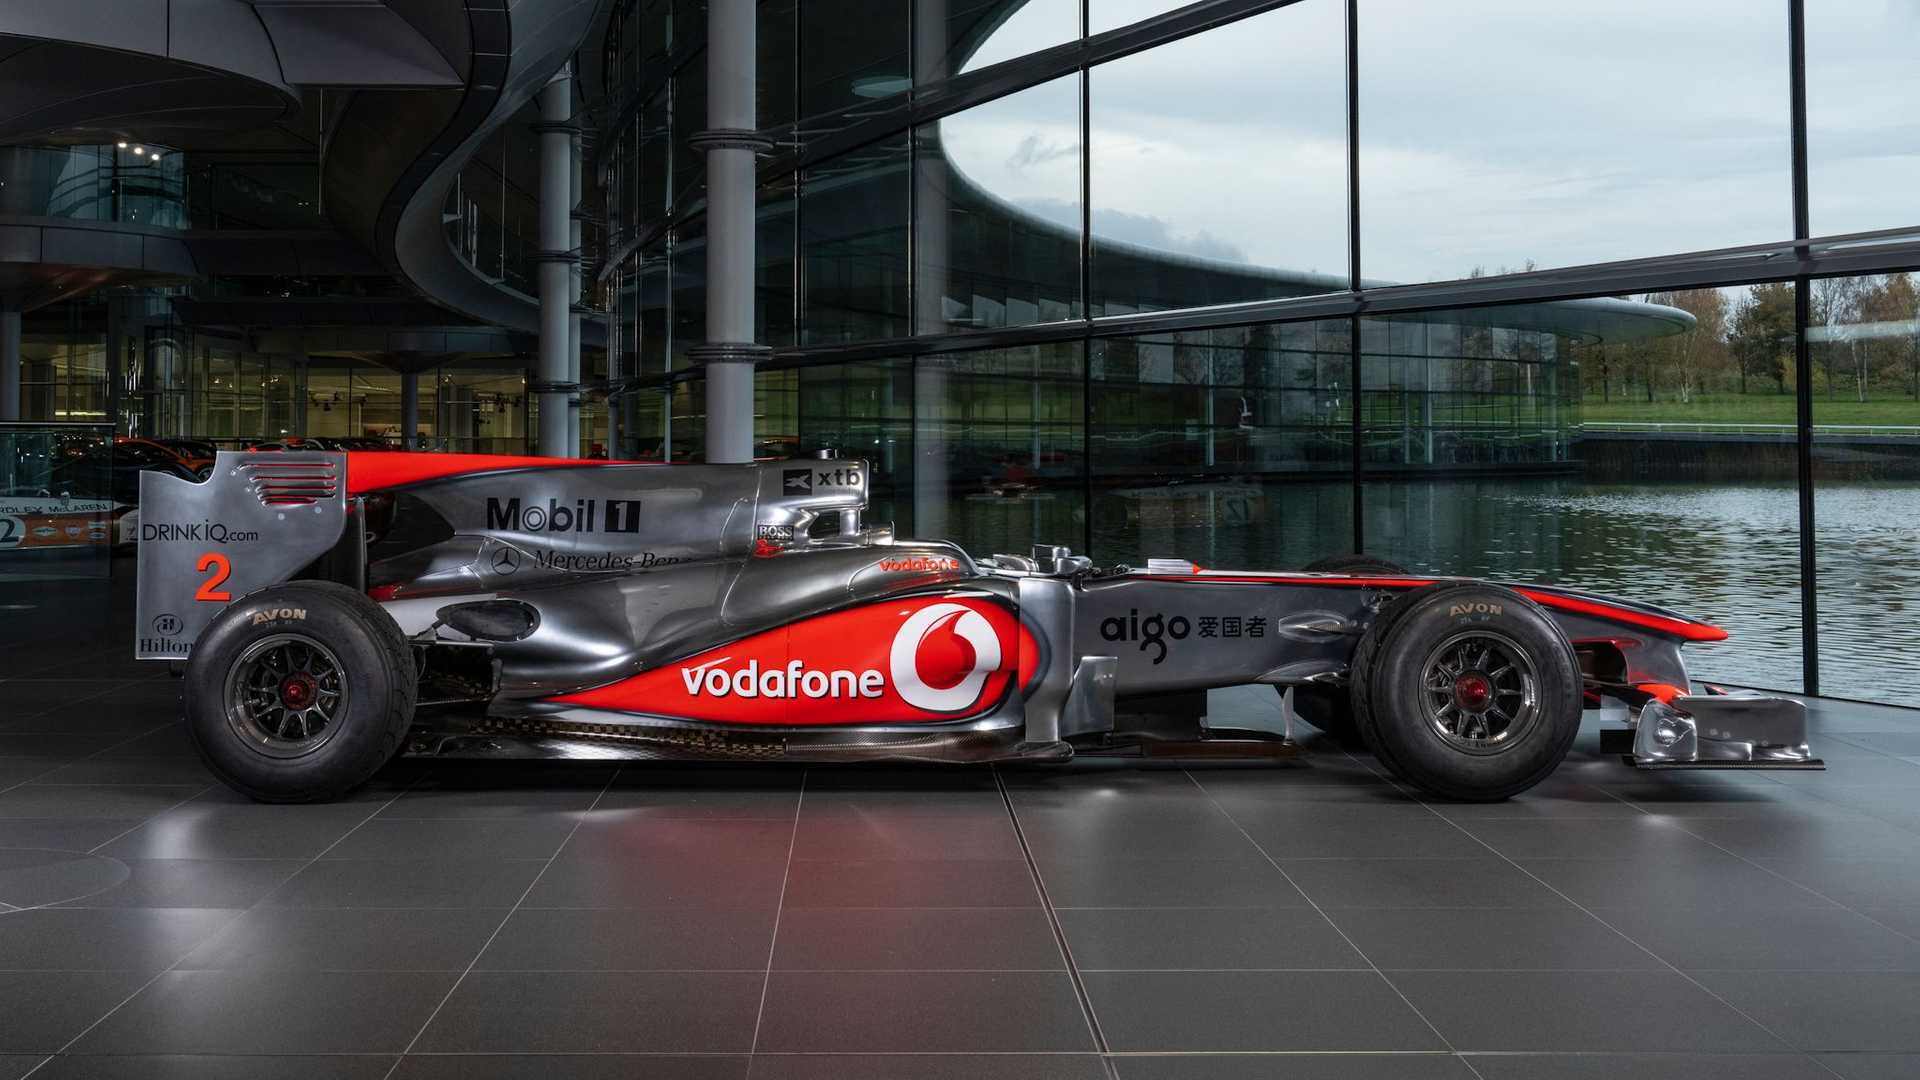 2010 McLaren MP4-25 Formula One car driven by Lewis Hamilton - Photo credit: RM Sotheby's